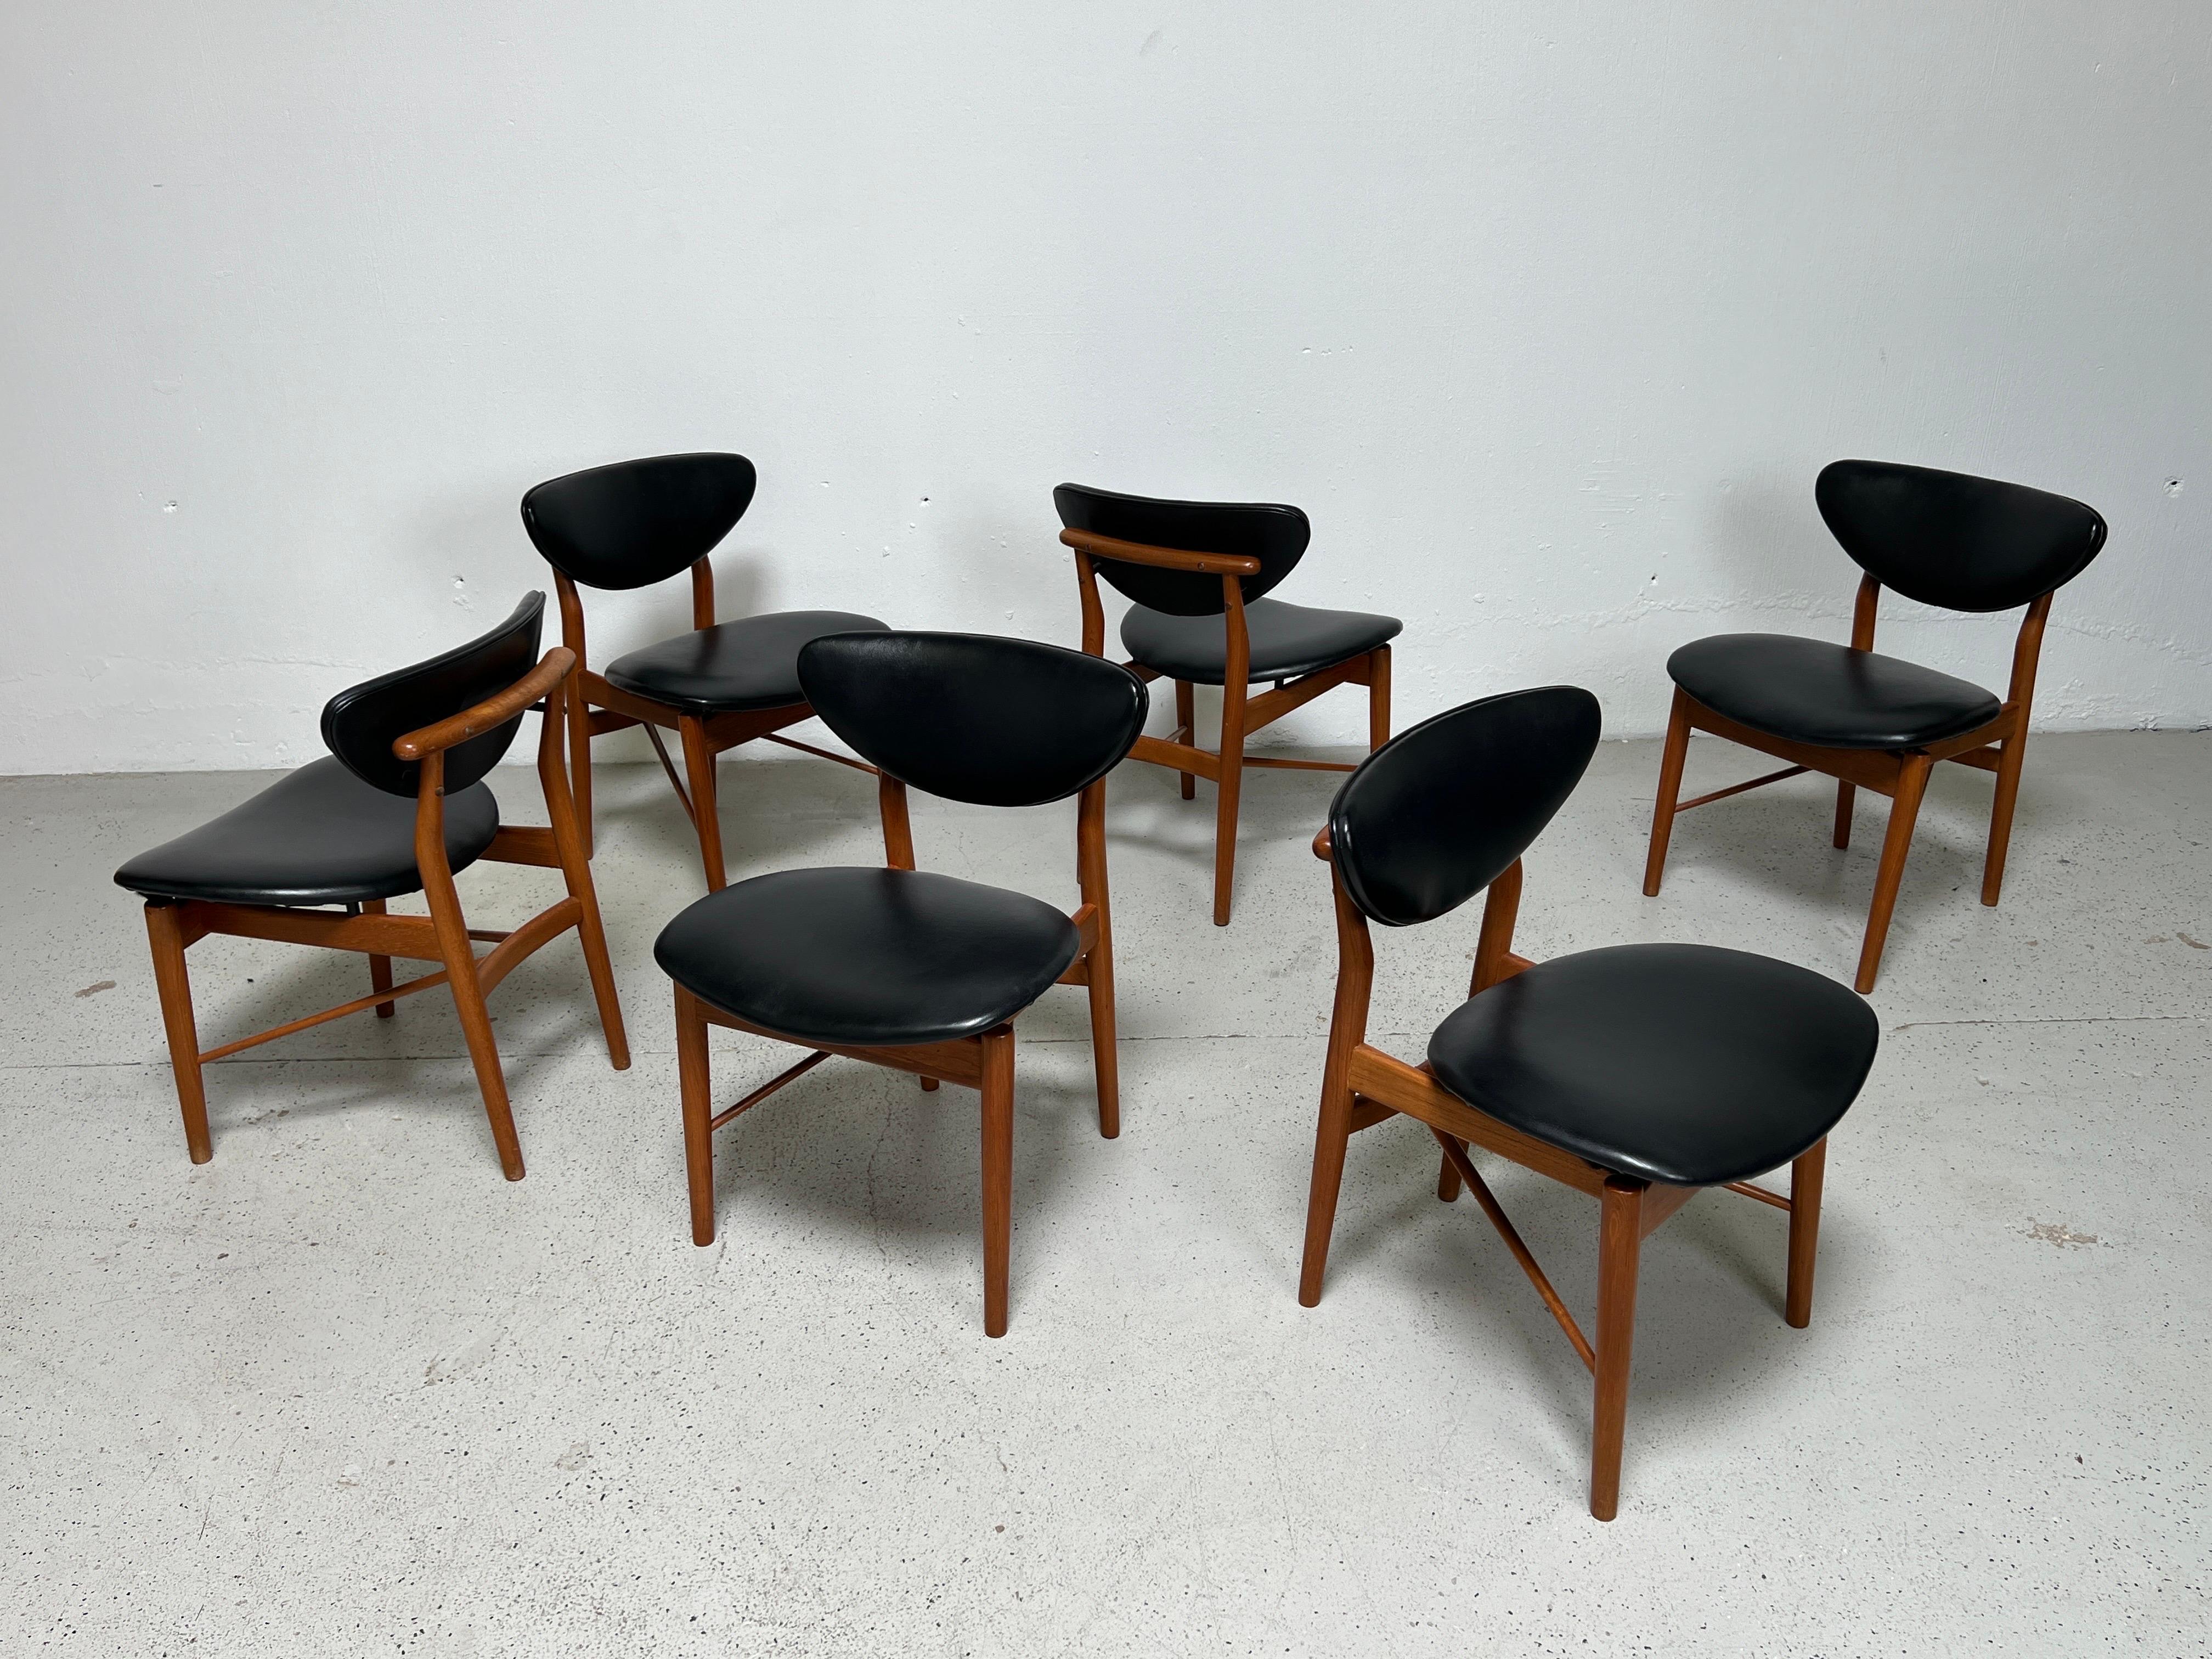 A set of six teak dining chairs in original vinyl deigned by Finn Juhl for Niels Vodder, 1946.